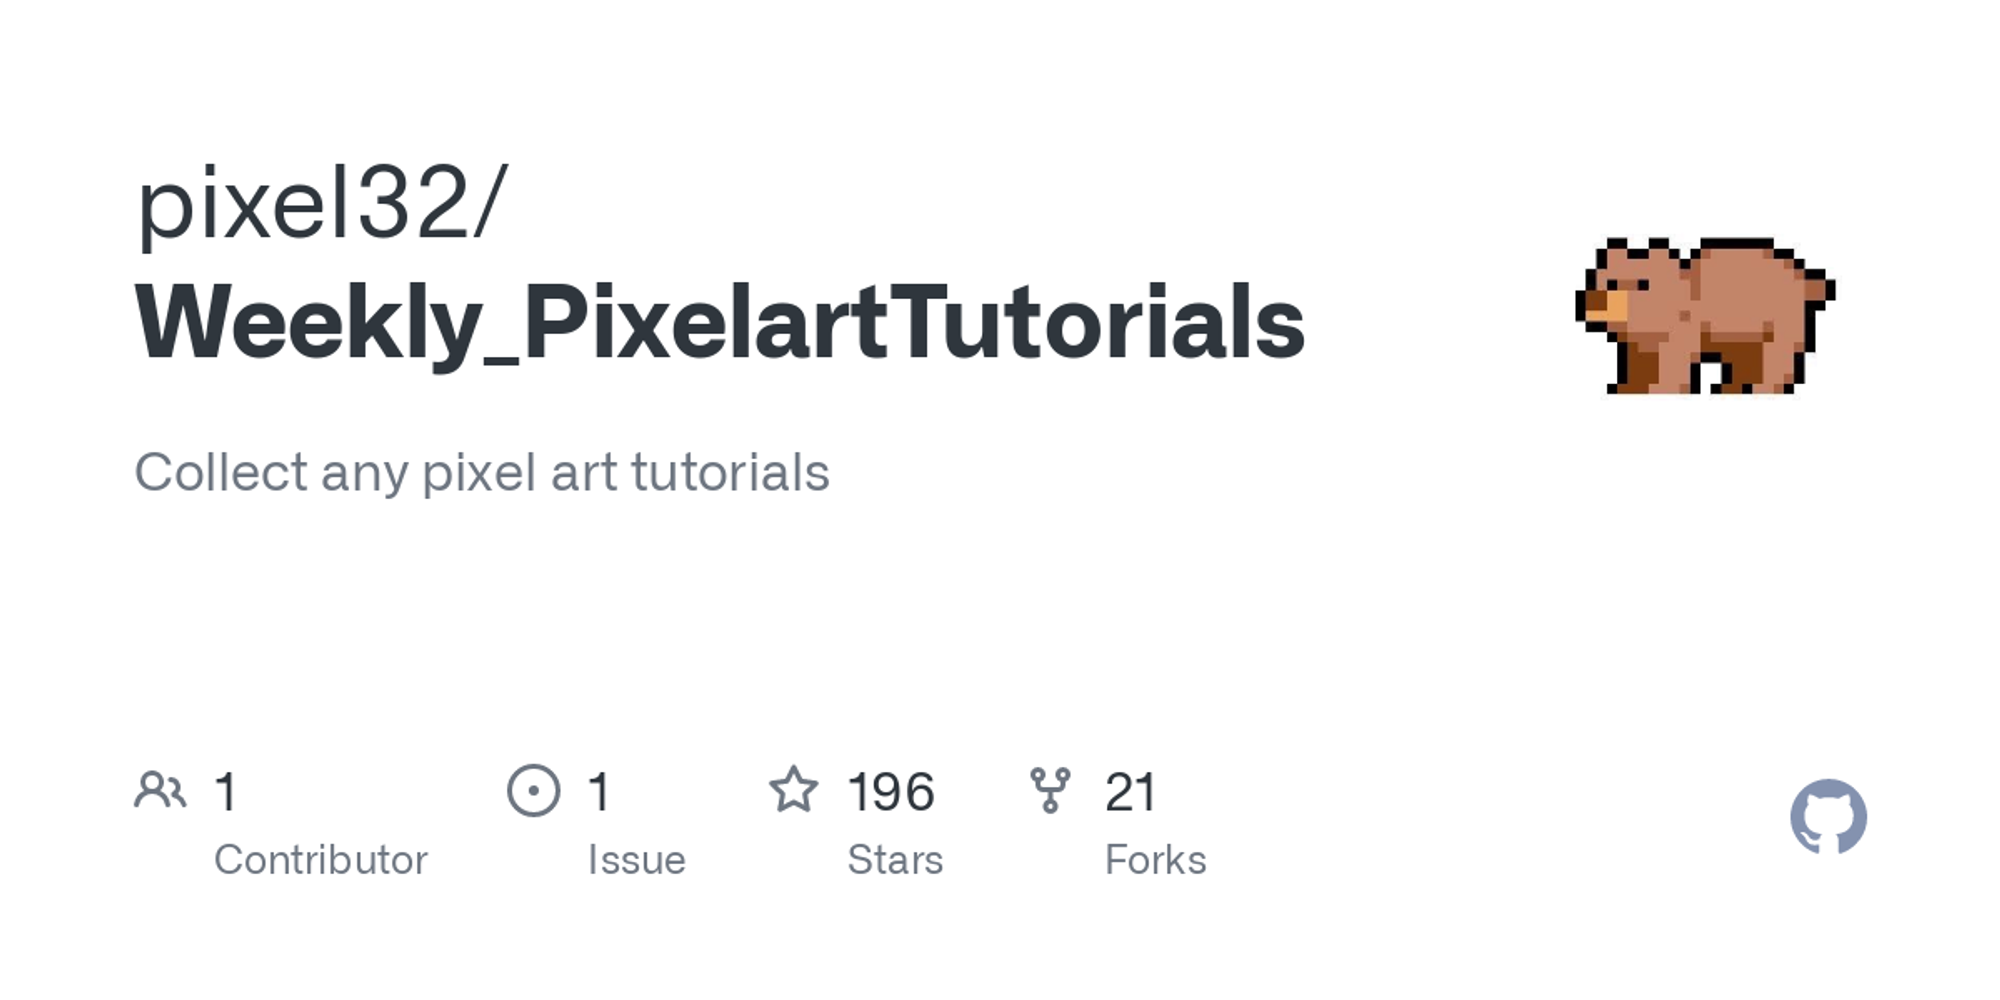 GitHub - pixel32/Weekly_PixelartTutorials: Collect any pixel art tutorials